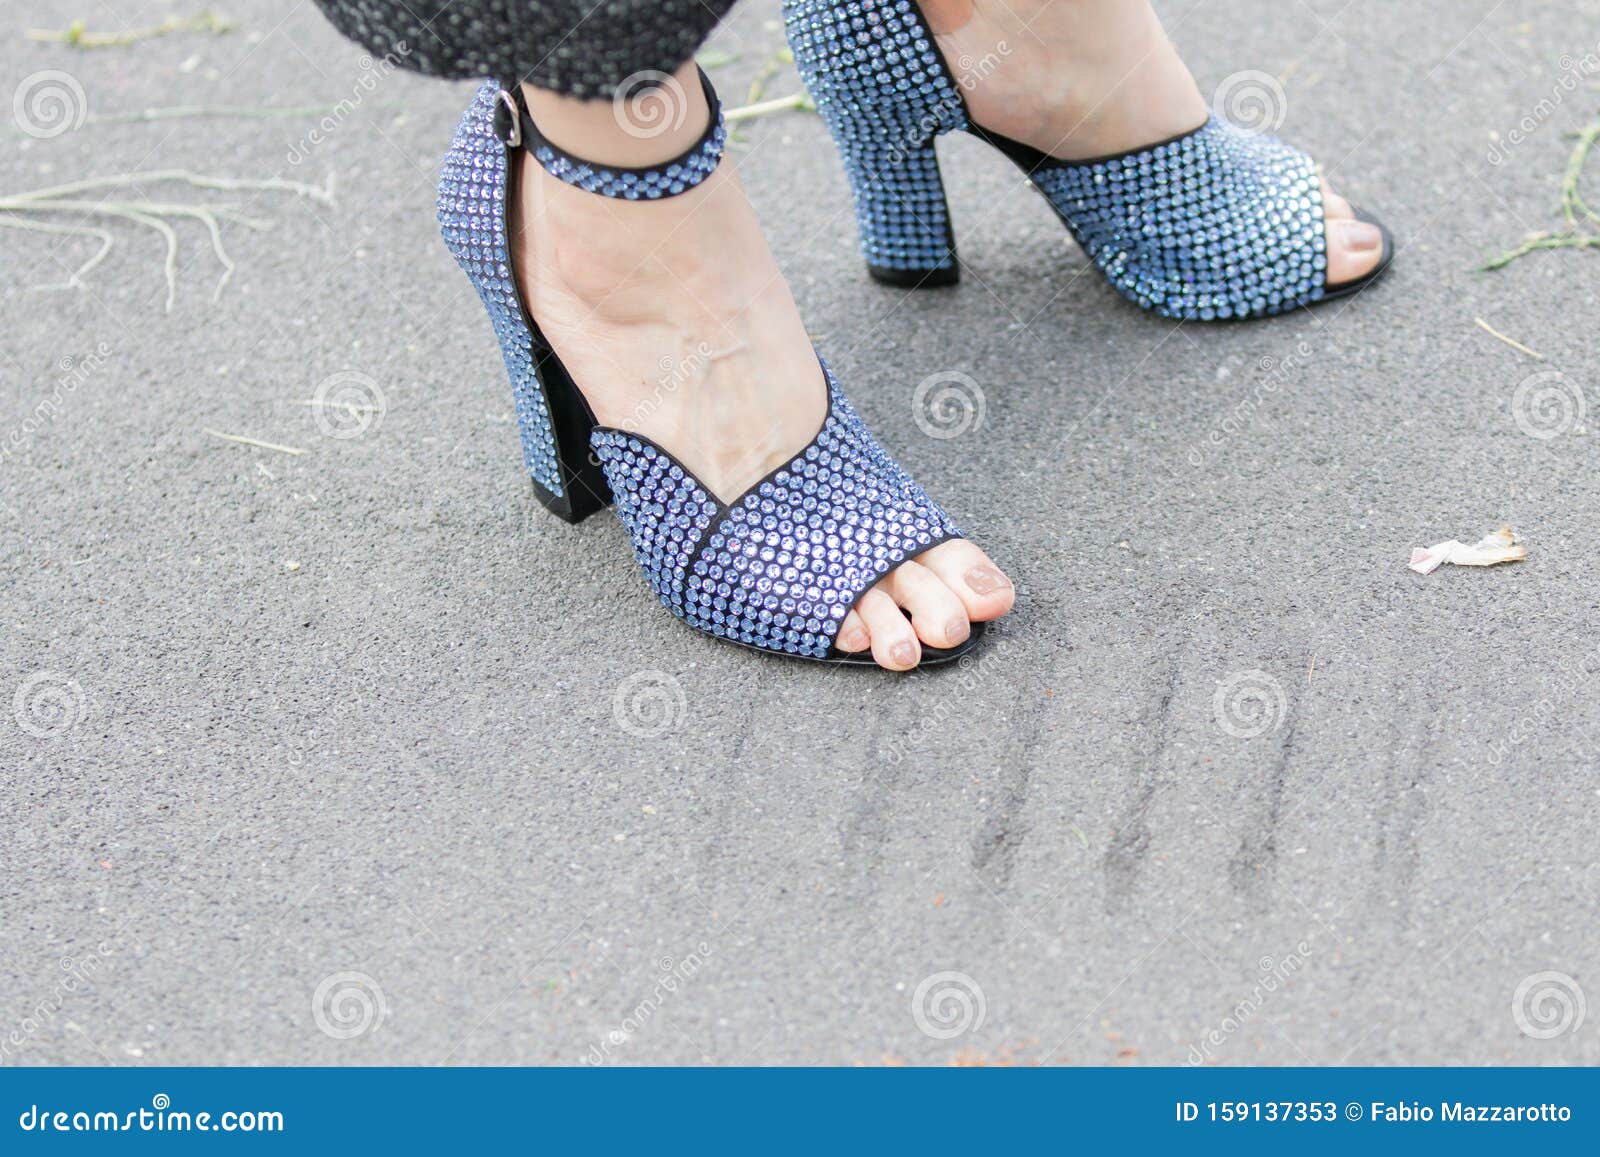 prada swarovski shoes